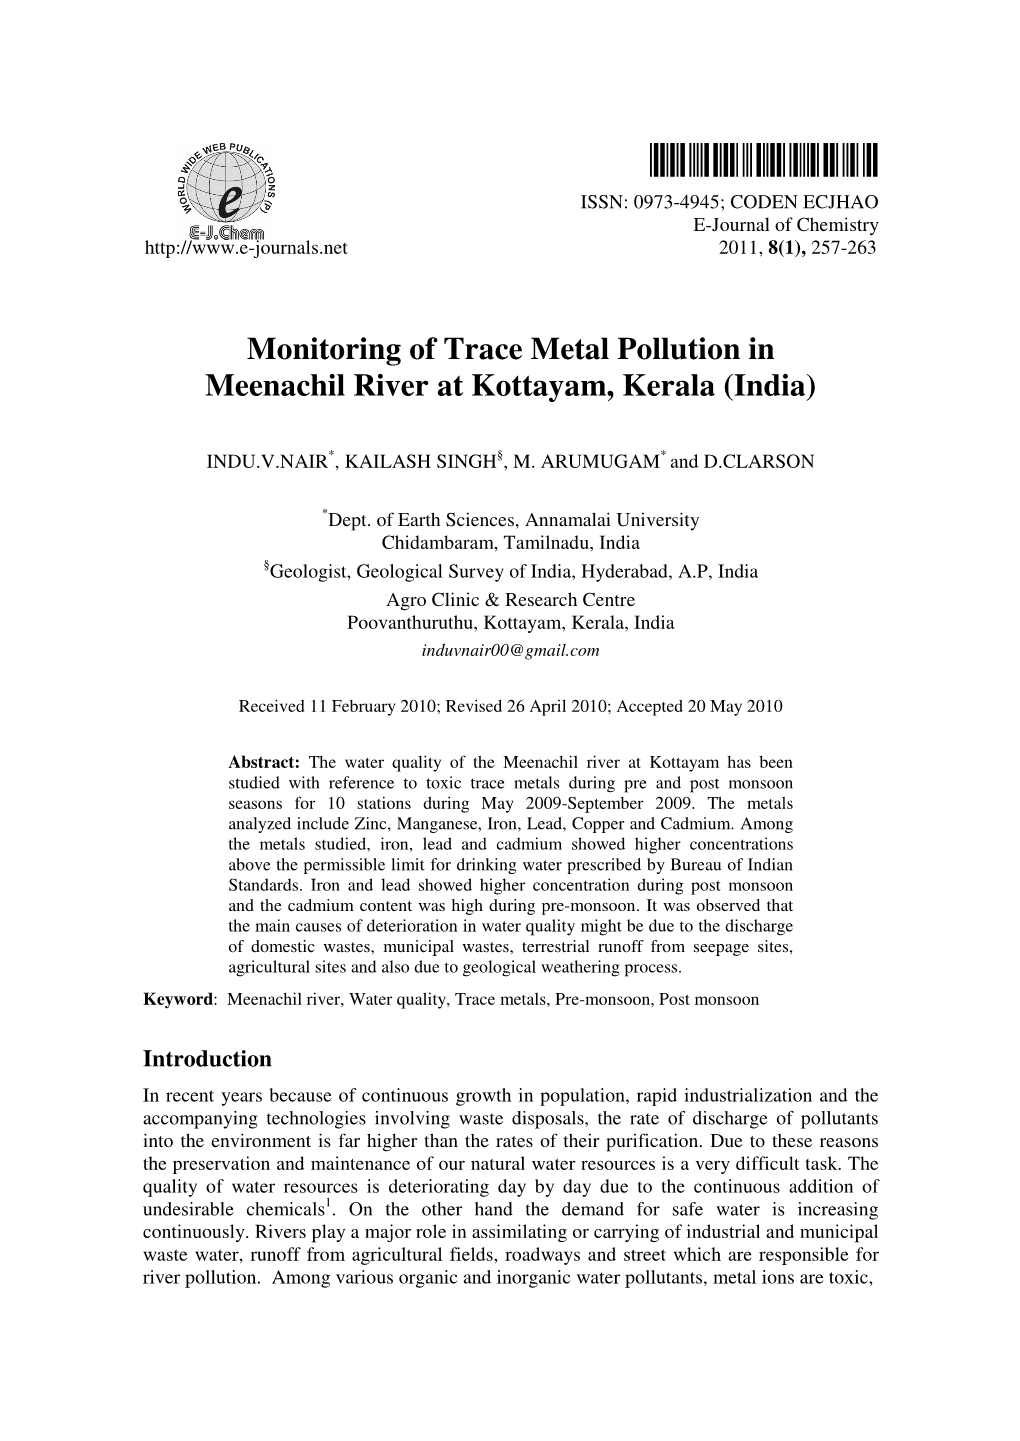 Monitoring of Trace Metal Pollution in Meenachil River at Kottayam, Kerala (India)